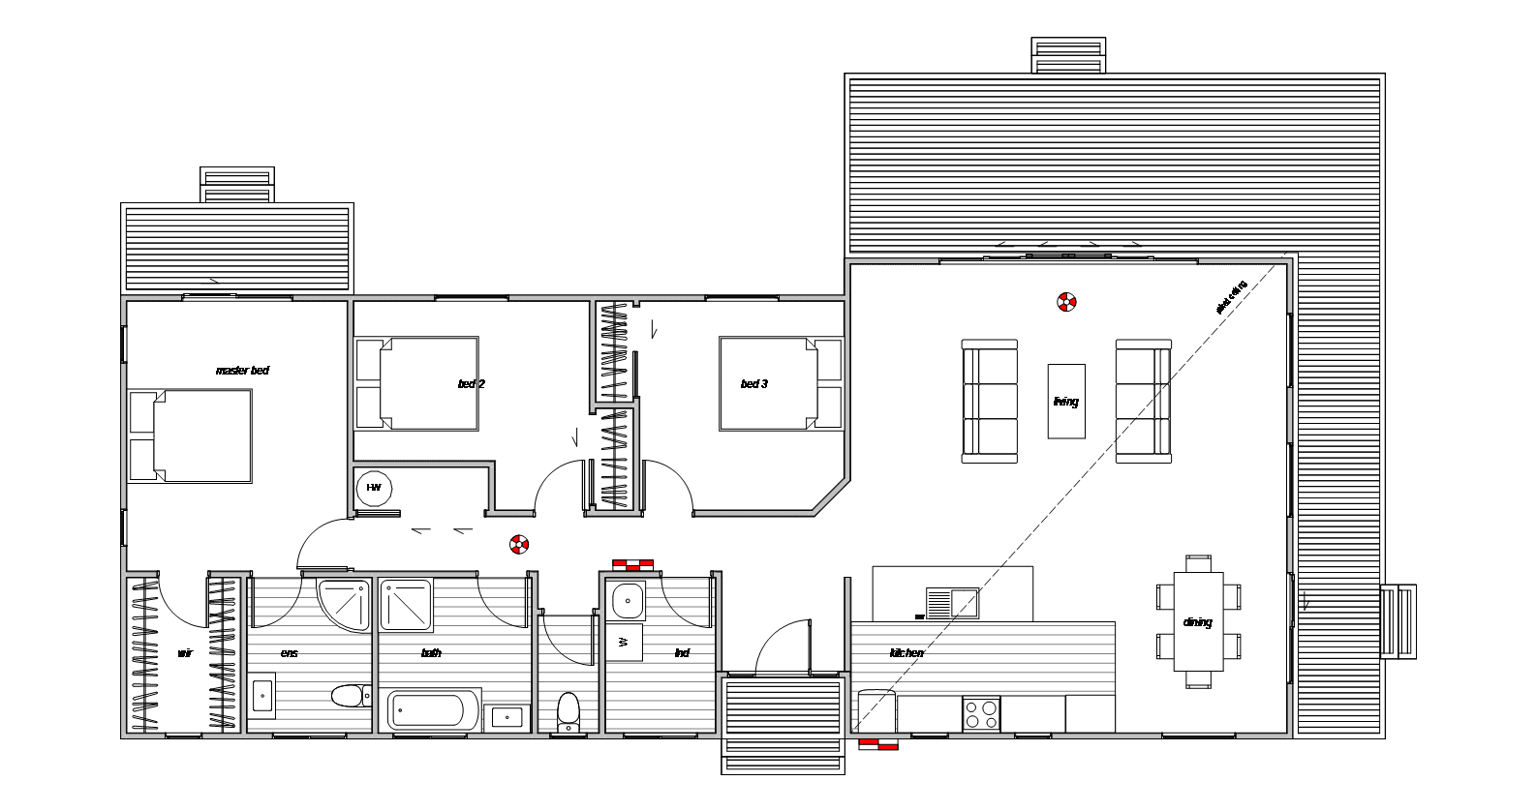 3-bedroom house